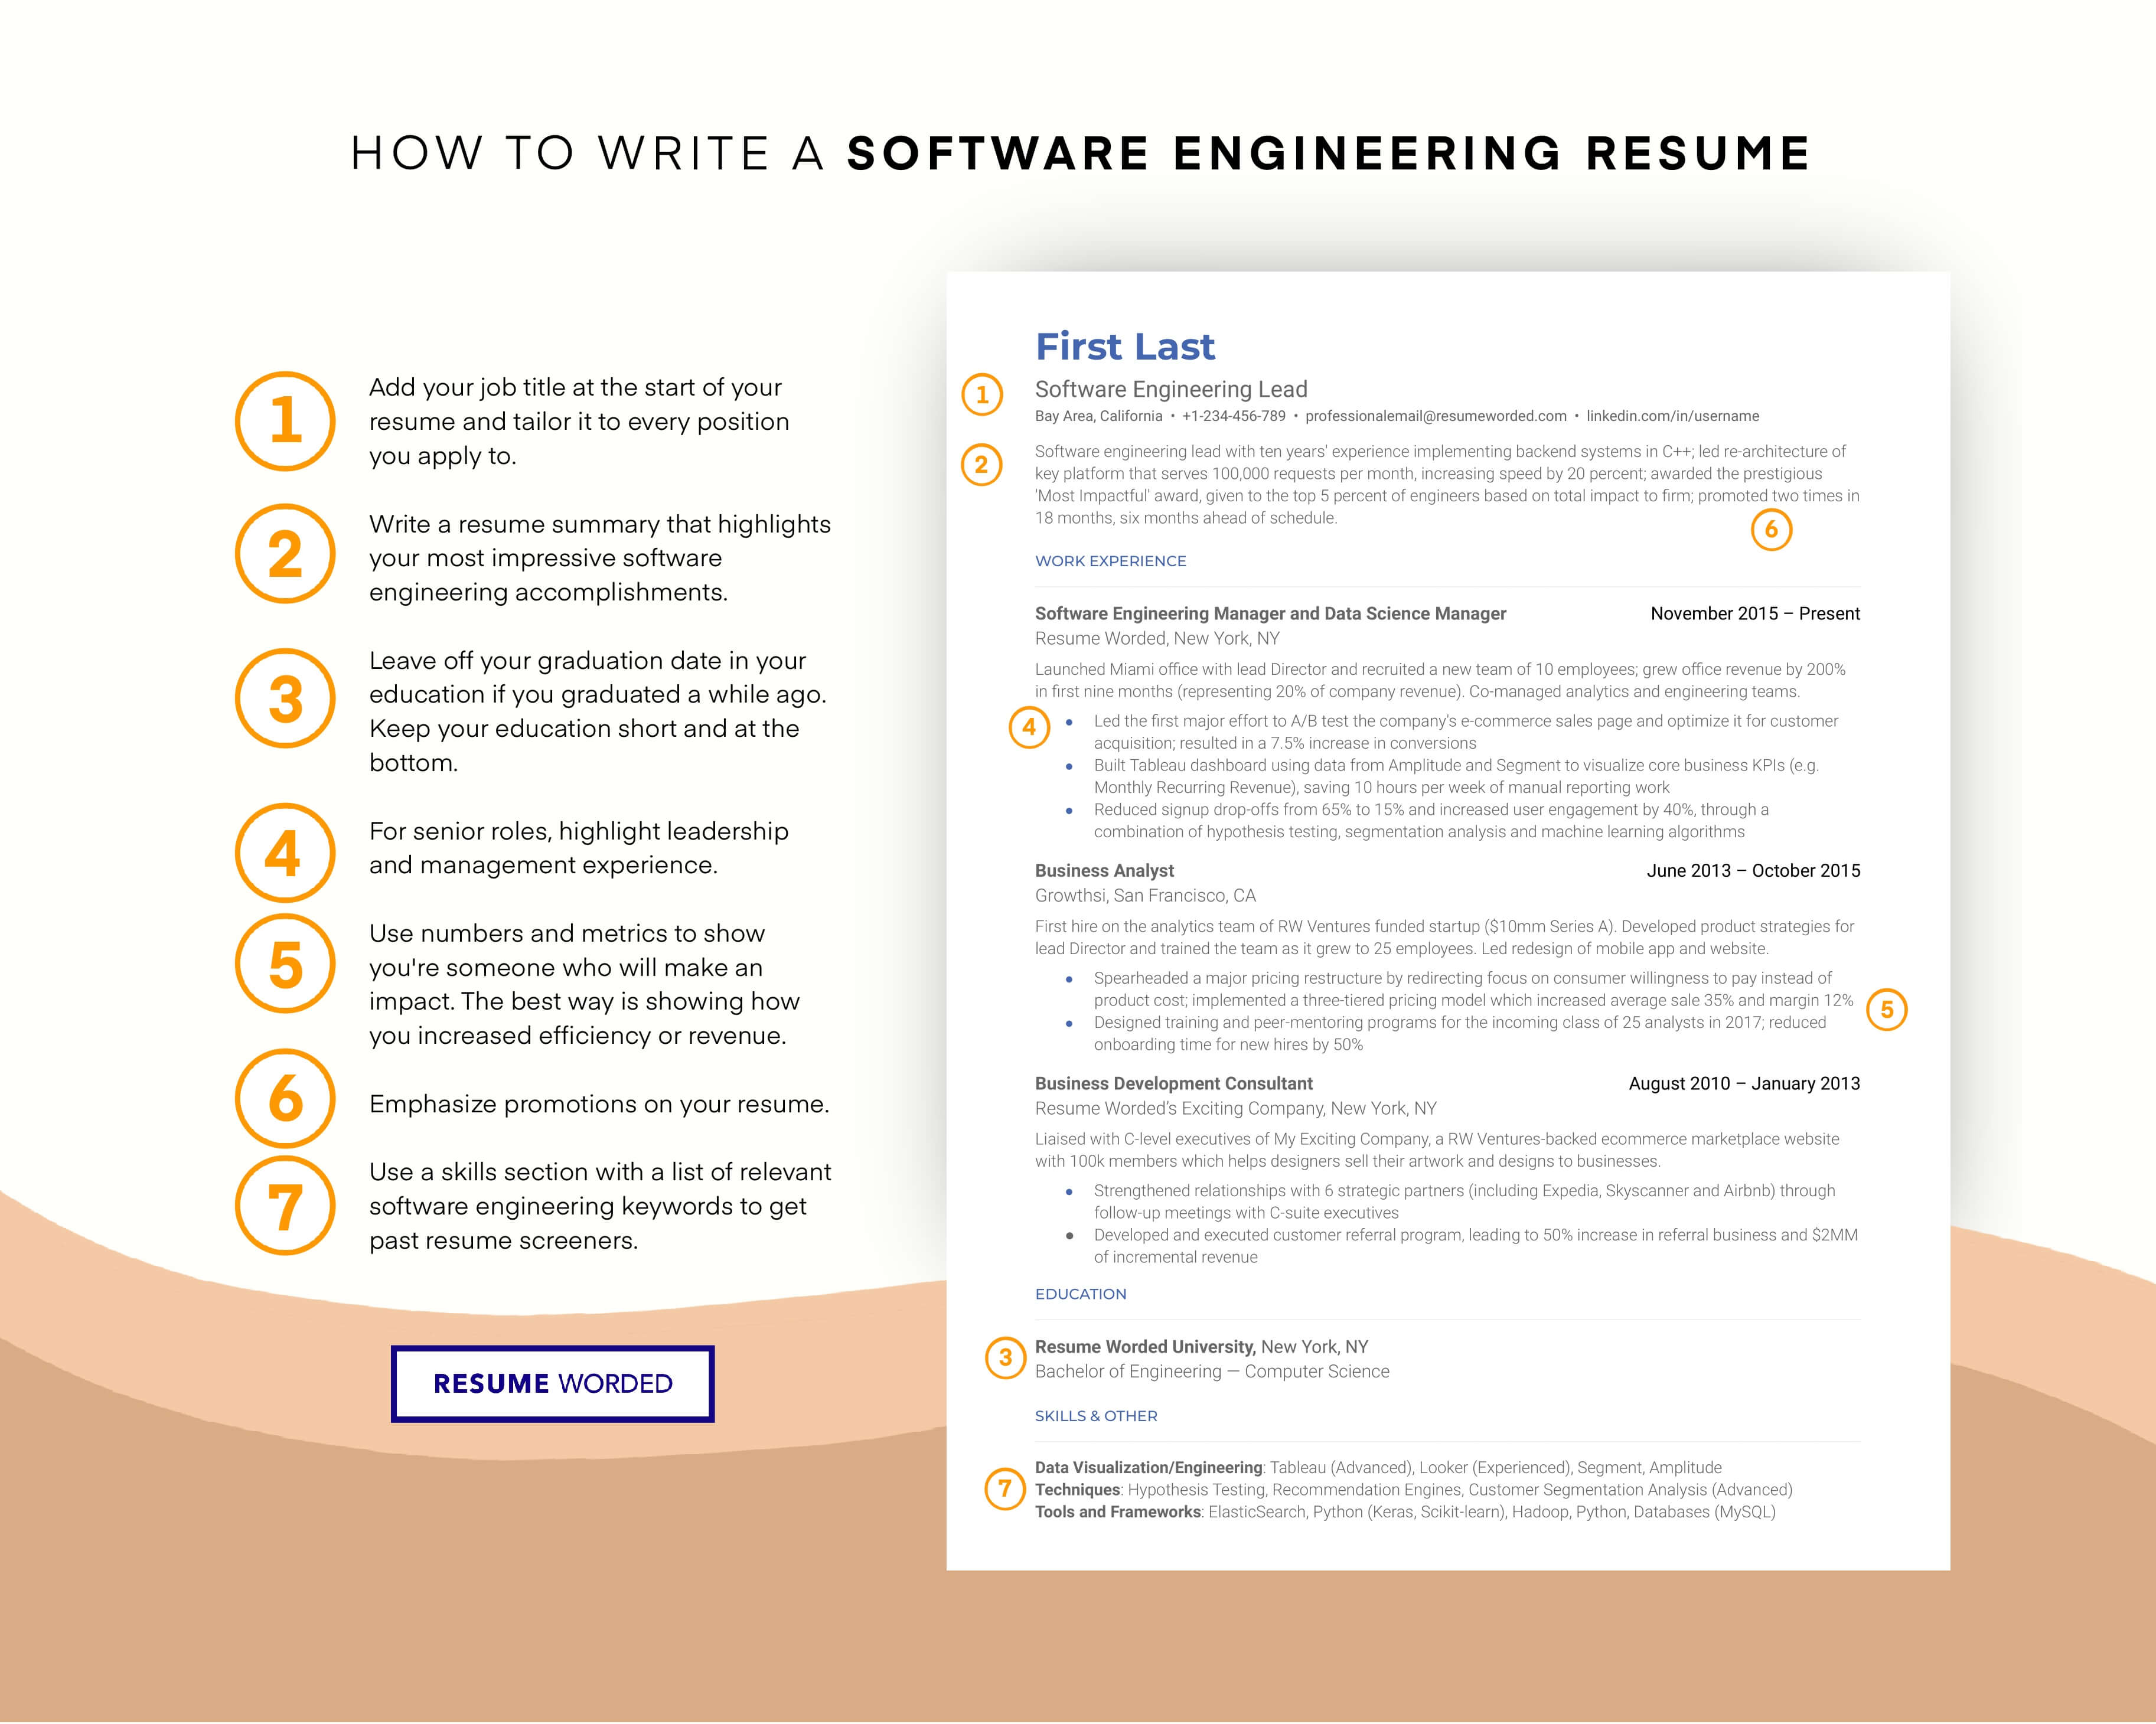 Highlight in your resume how your degree strengthens your software development skills - DevOps Platform Engineer  Resume